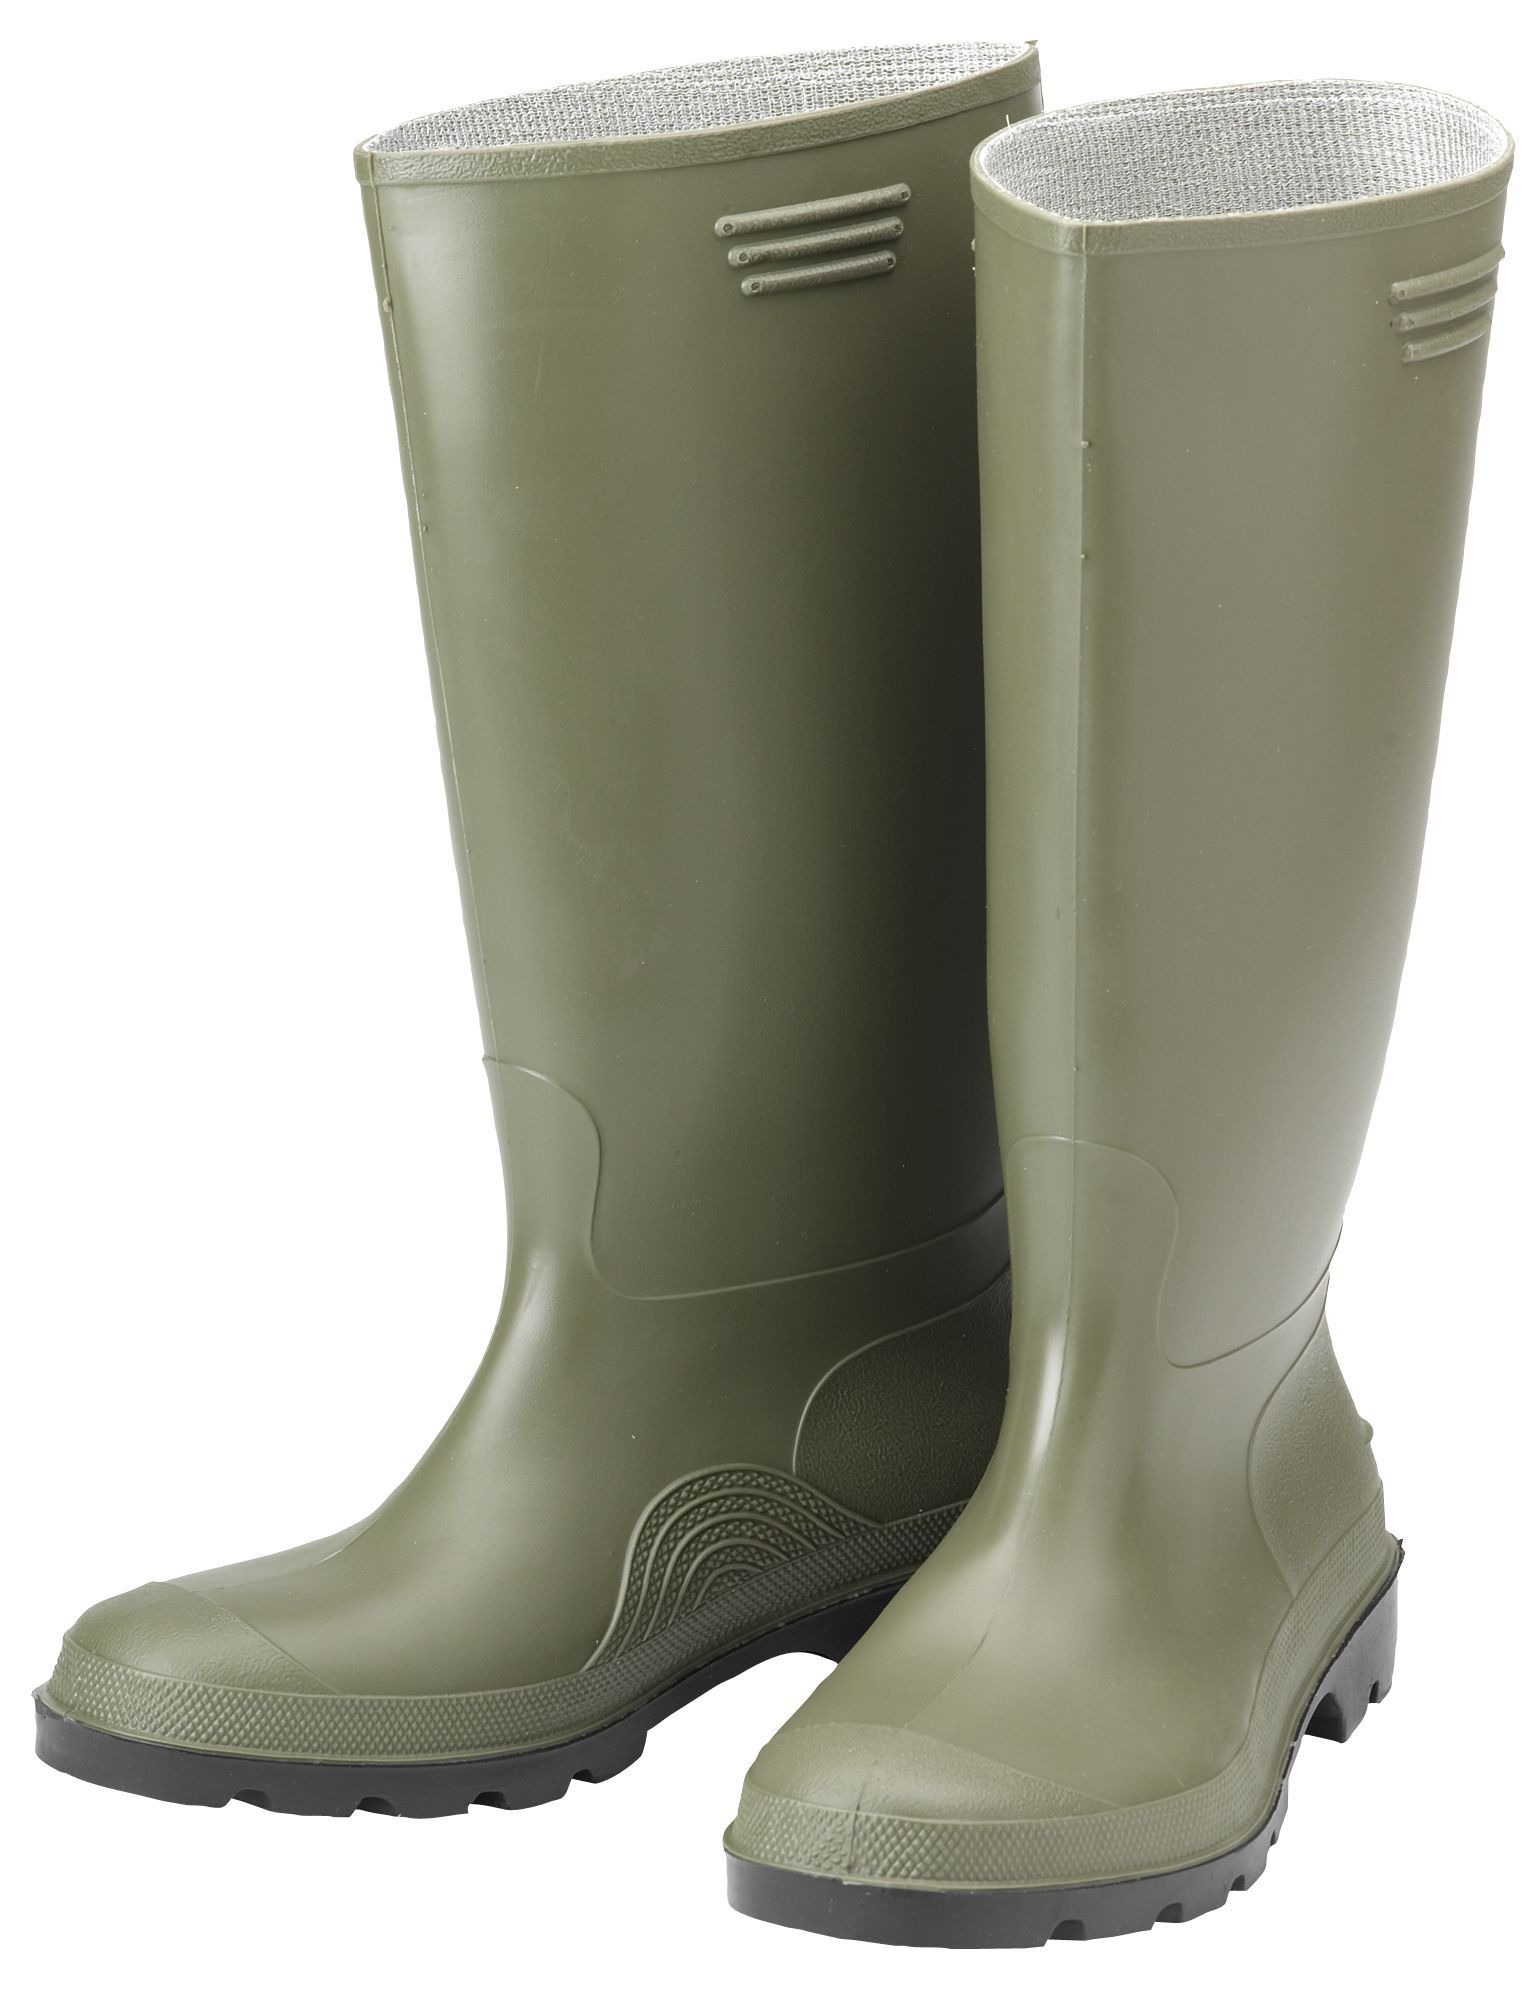 B&Q Green Wellington boots, Size 10 | DIY at B&Q